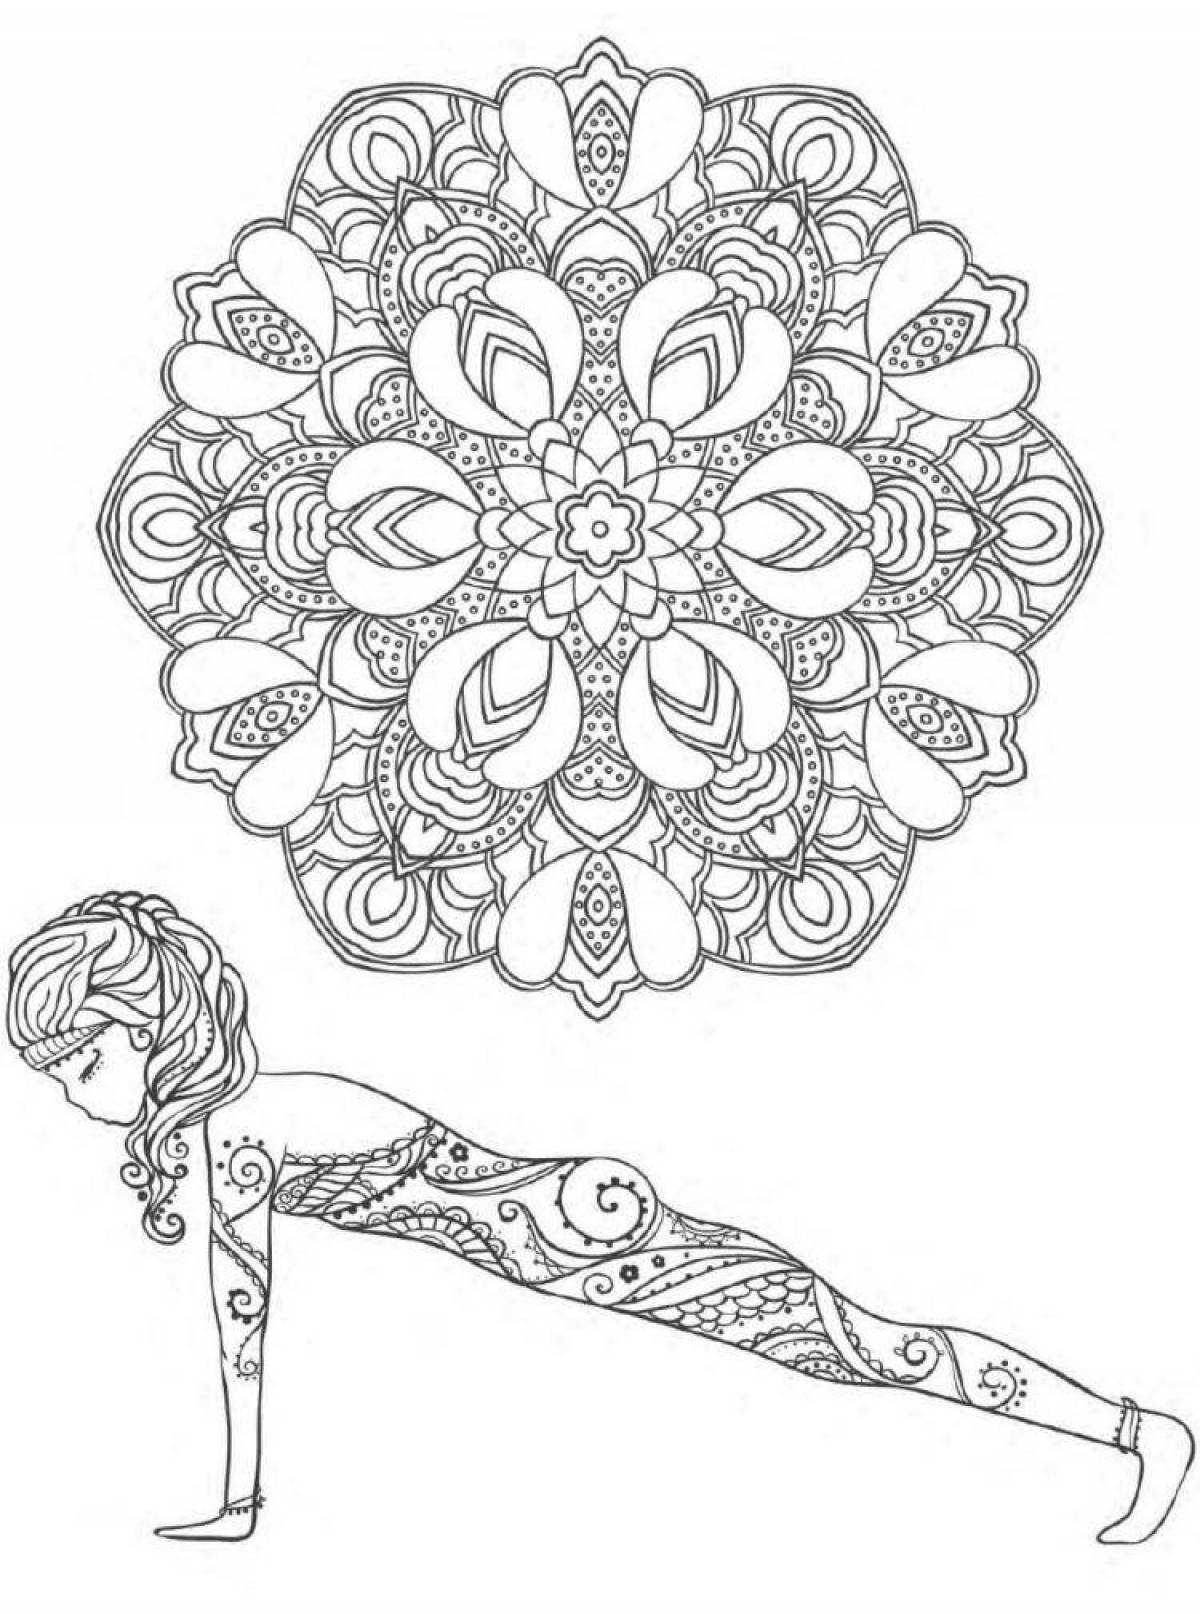 Yoga coloring book